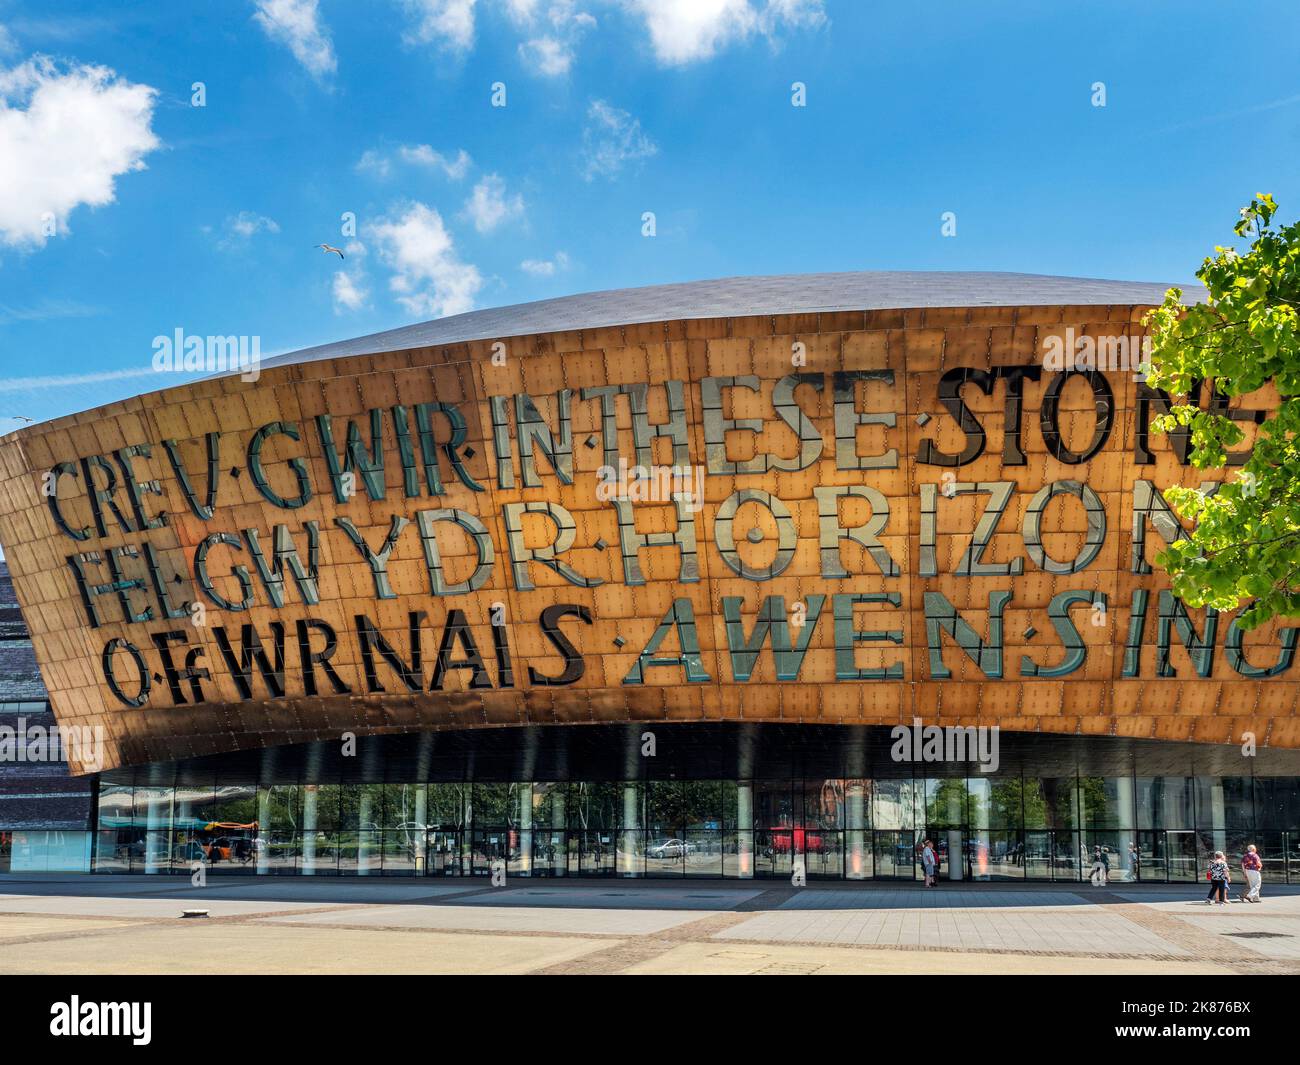 Wales Millennium Centre, Cardiff, Wales, United Kingdom, Europe Stock Photo